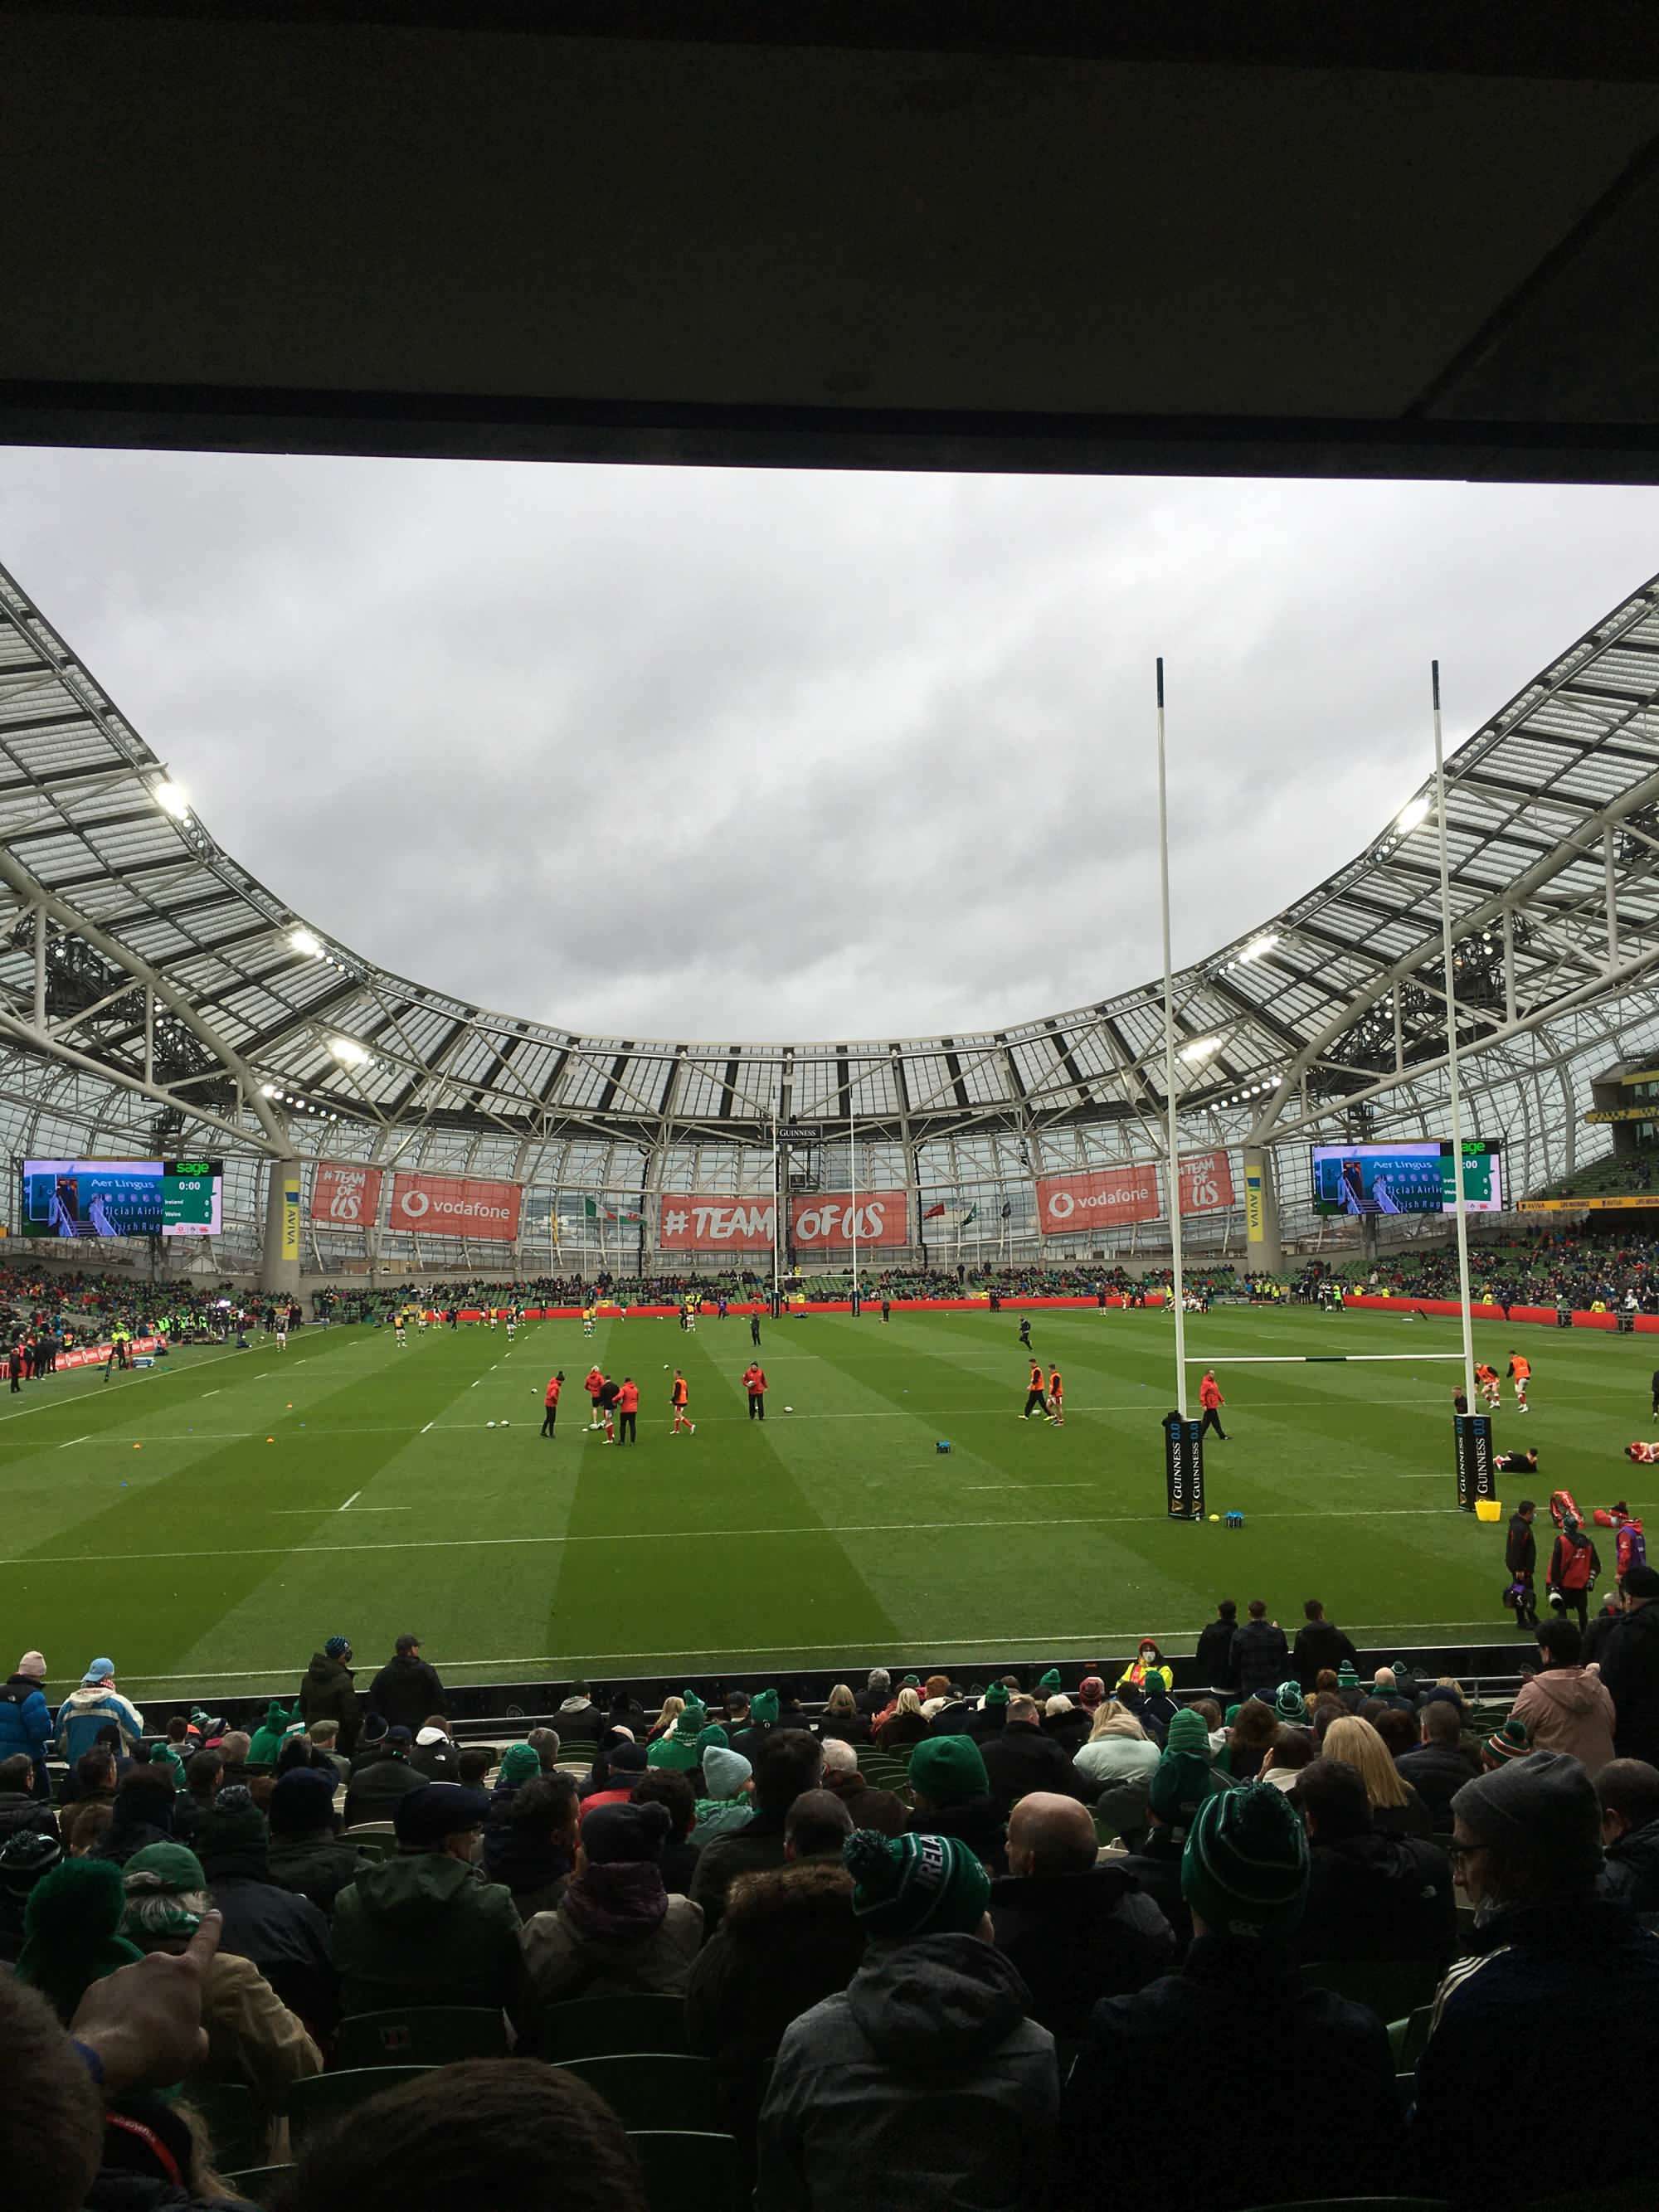 View of Ireland v Wales, Six Nations, 05 February 2022 at Aviva Stadium from Seat Block 115